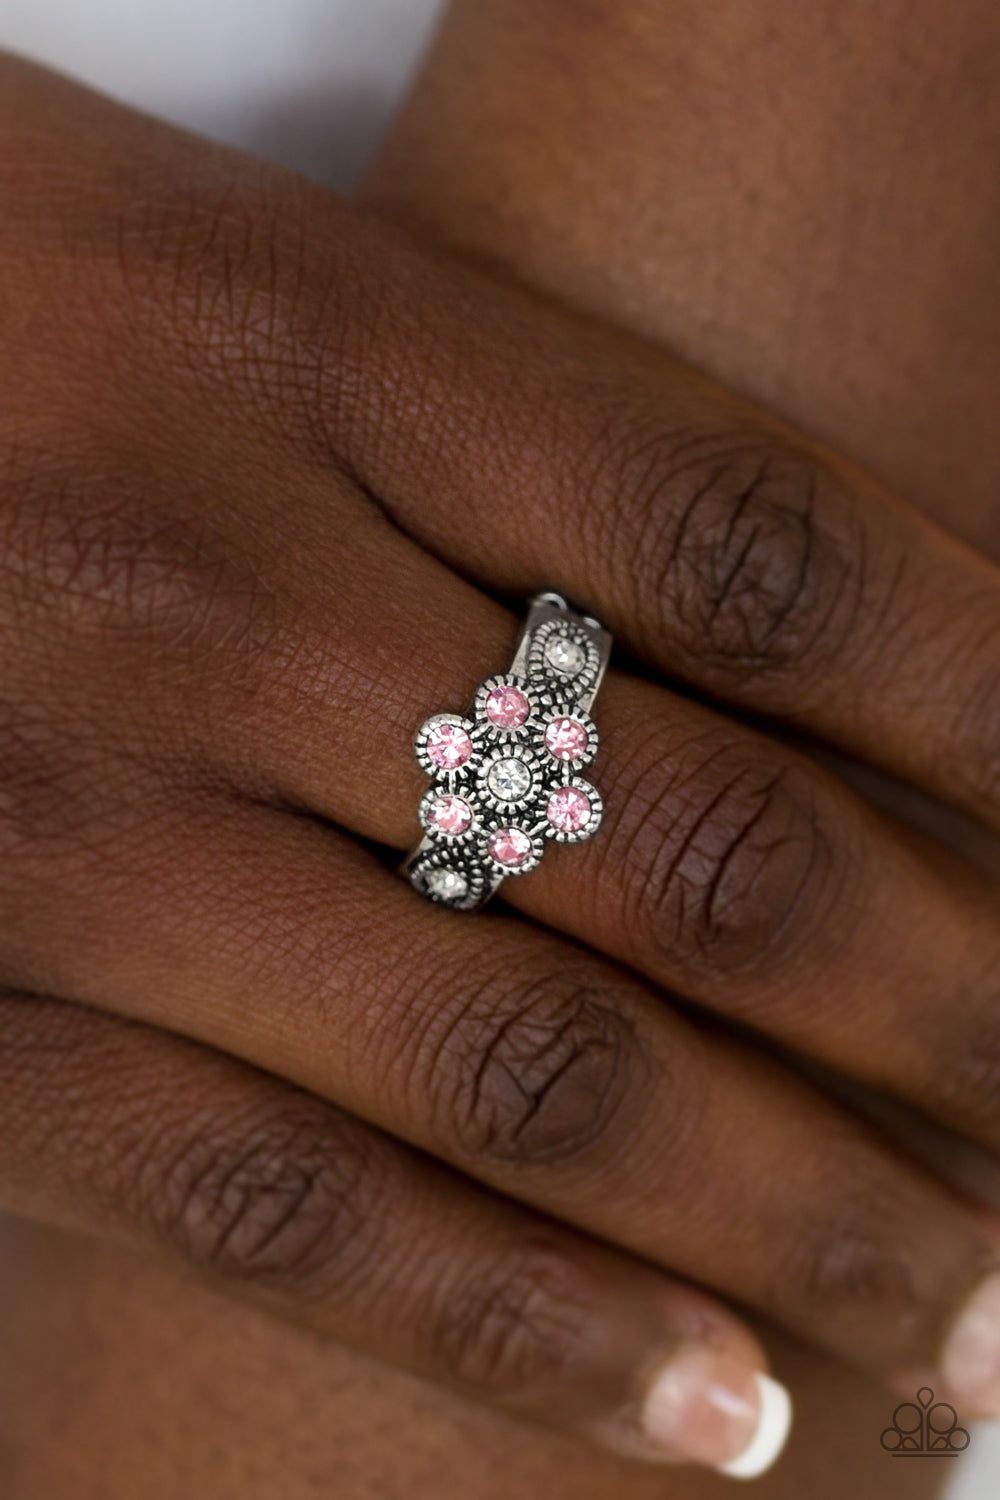 Paparazzi Garland Glamour - Pink Rhinestones - Ring - $5 Jewelry With Ashley Swint